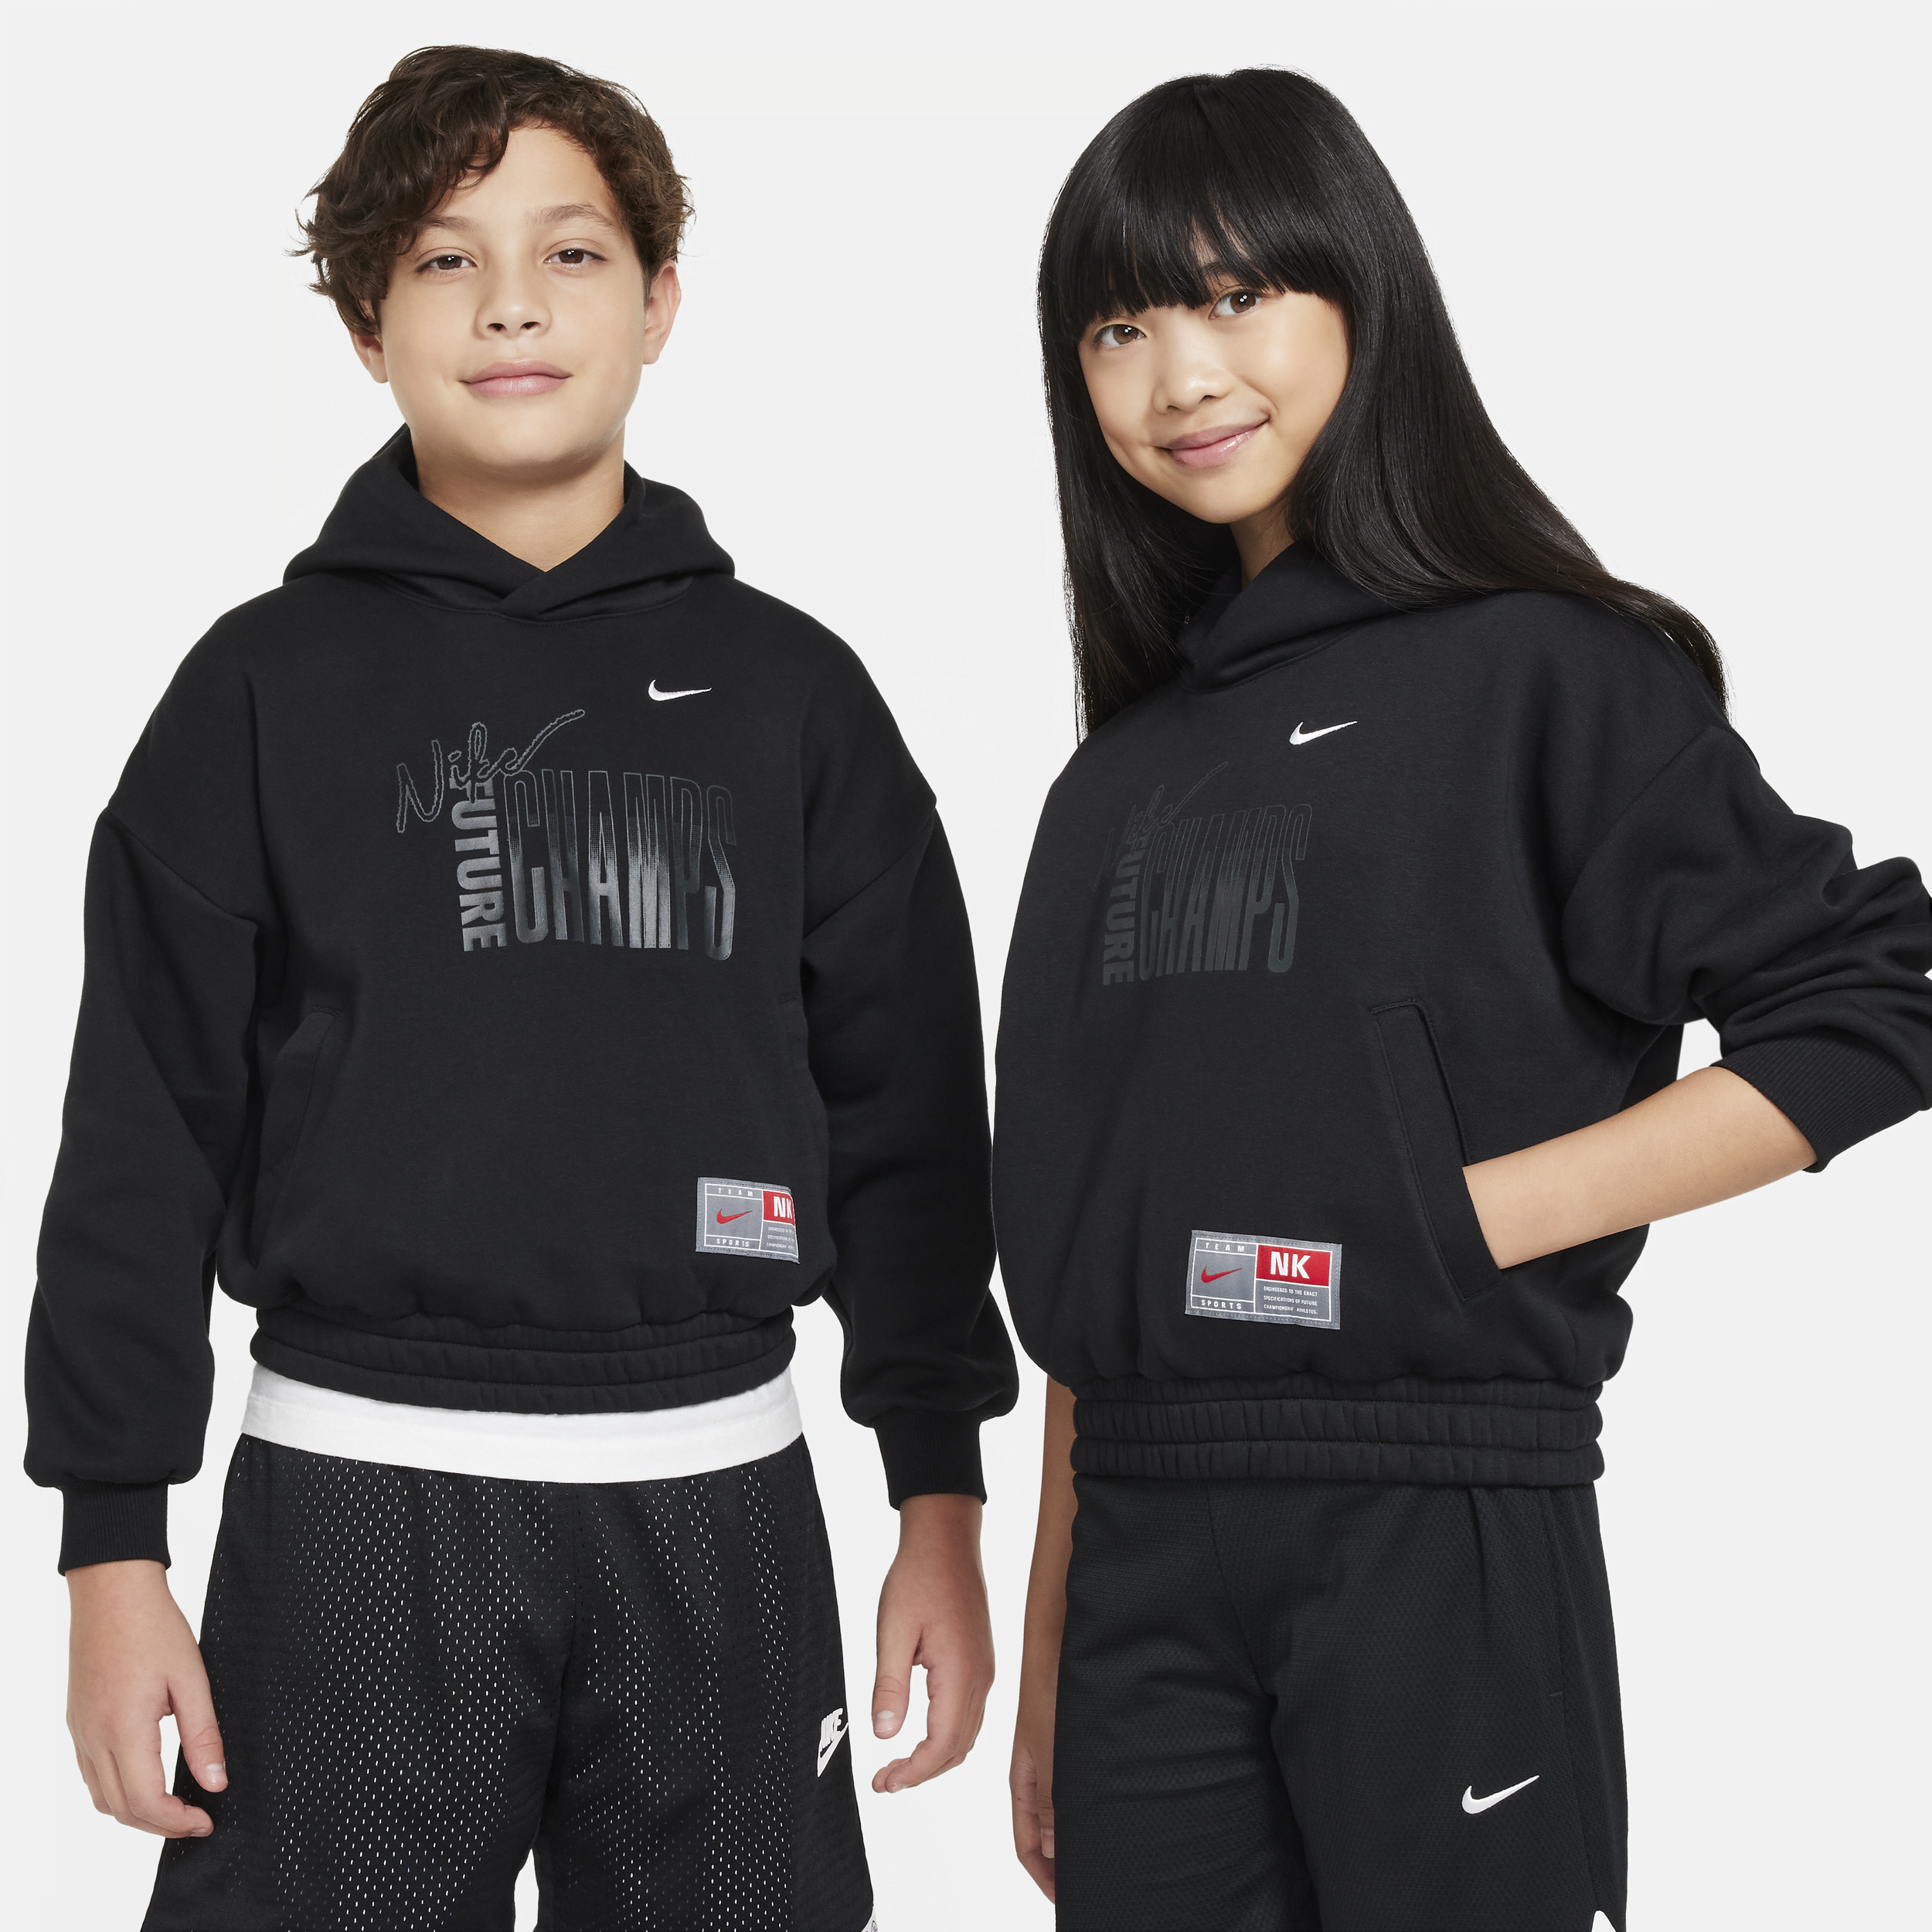 Nike Culture of Basketball Sudadera con capucha de tejido Fleece - Niño/a - Negro